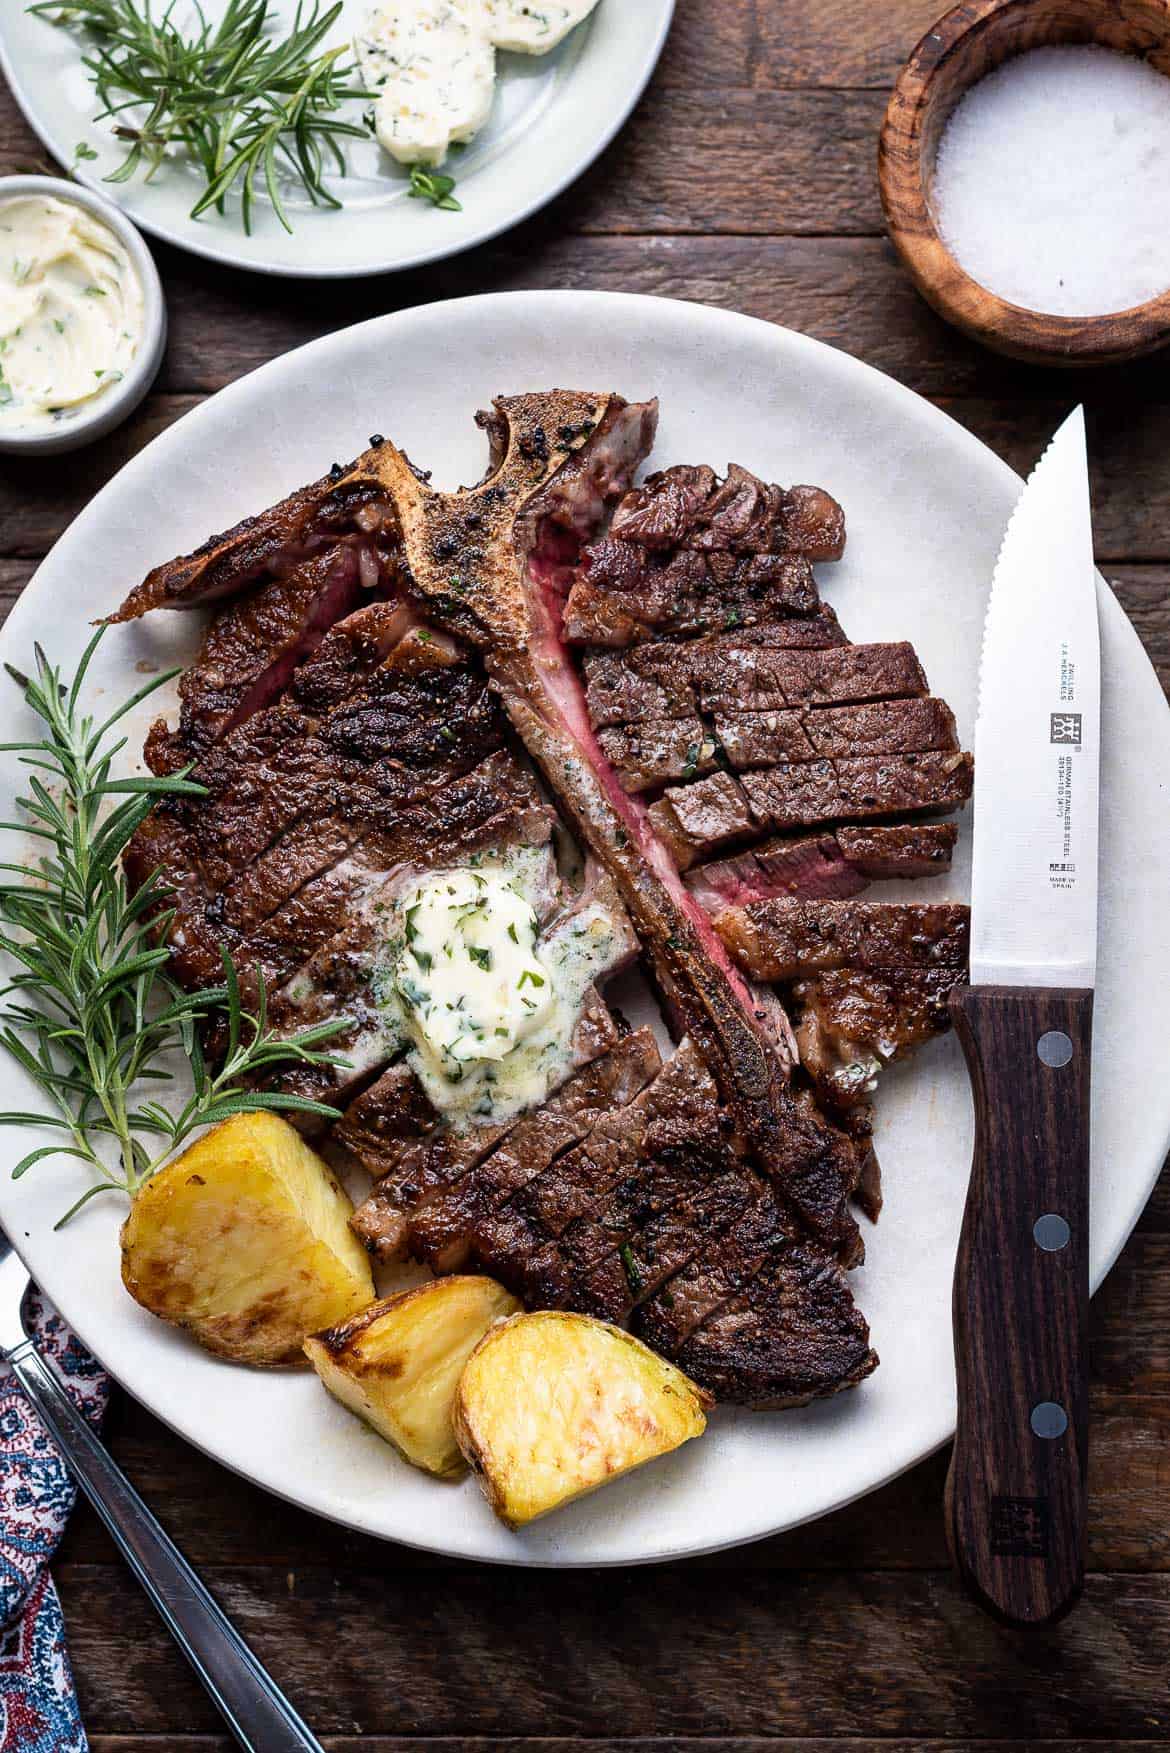 https://kitchenconfidante.com/wp-content/uploads/2022/05/Angus-Beef-Steak-Recipe-with-Garlic-Herb-Compound-Butter-kitchenconfidante.com-2745-FEATURED-IMAGE.jpg